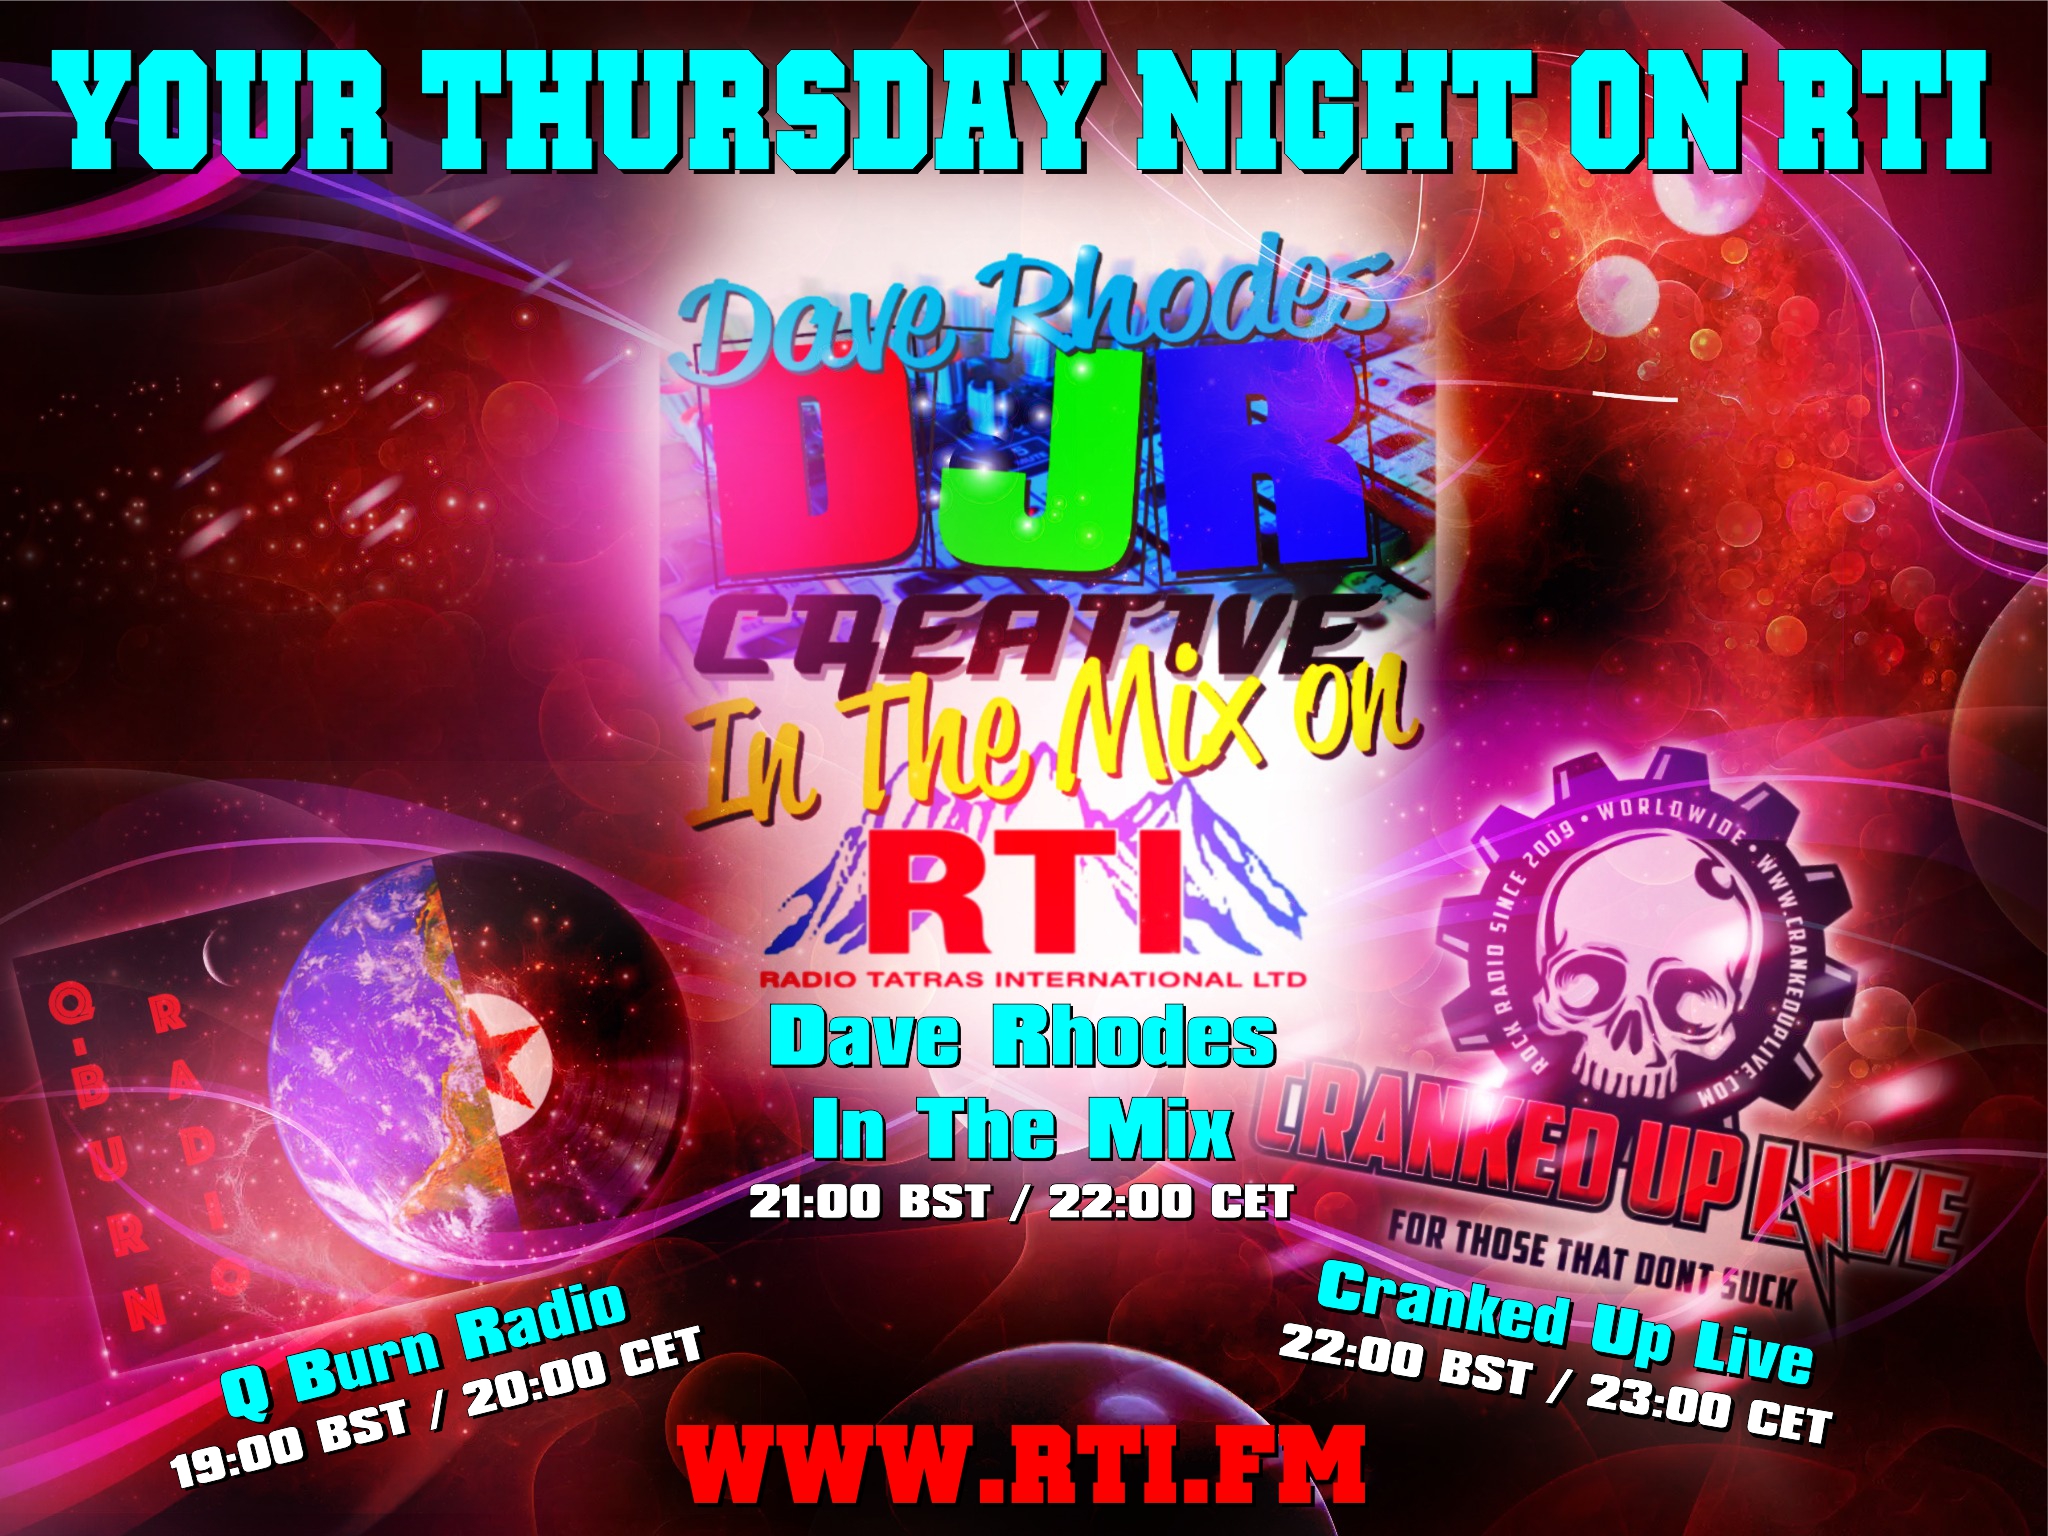 Thursday Night on RTI BST Vers.jpg